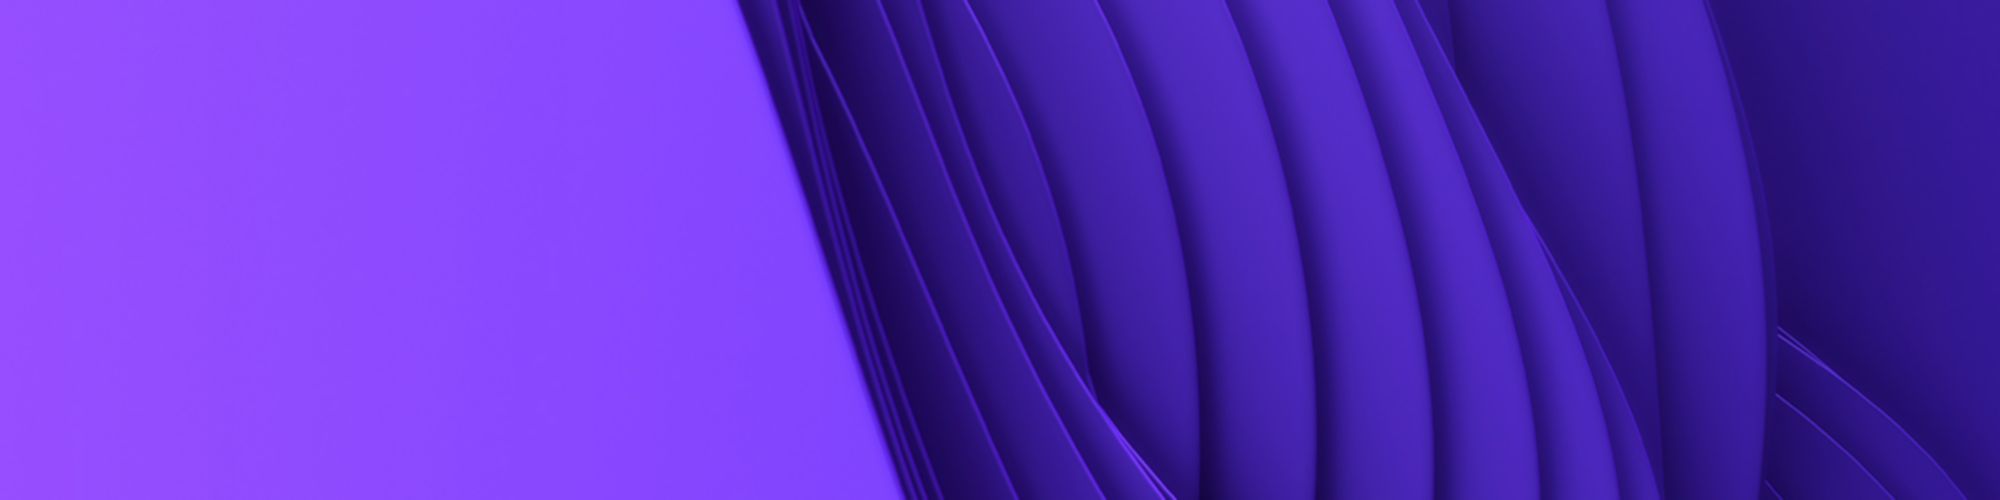 purple-layers-banner